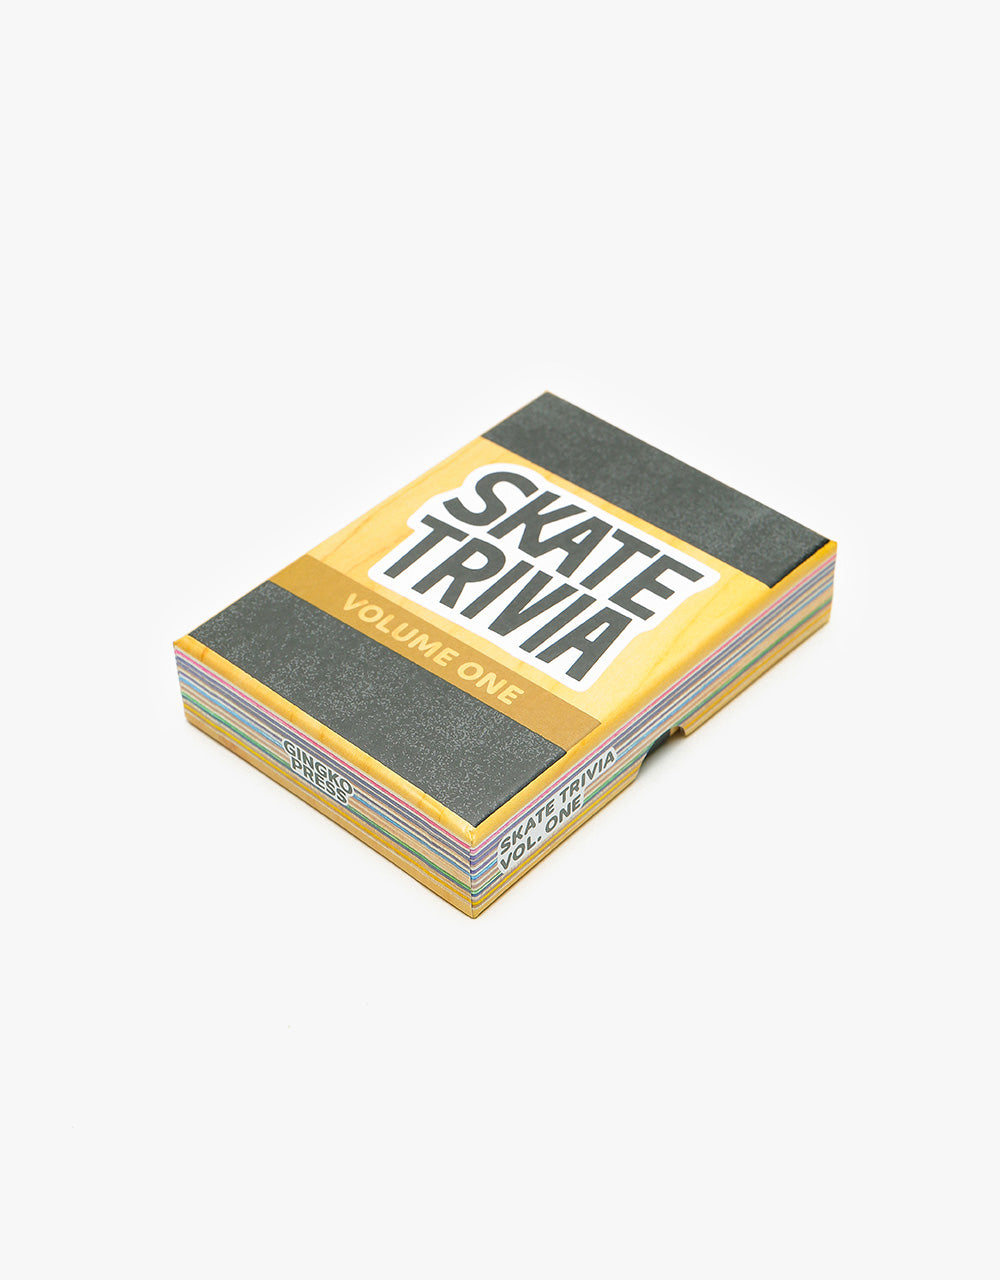 Skate Trivia Game - Volume 1 – Route One